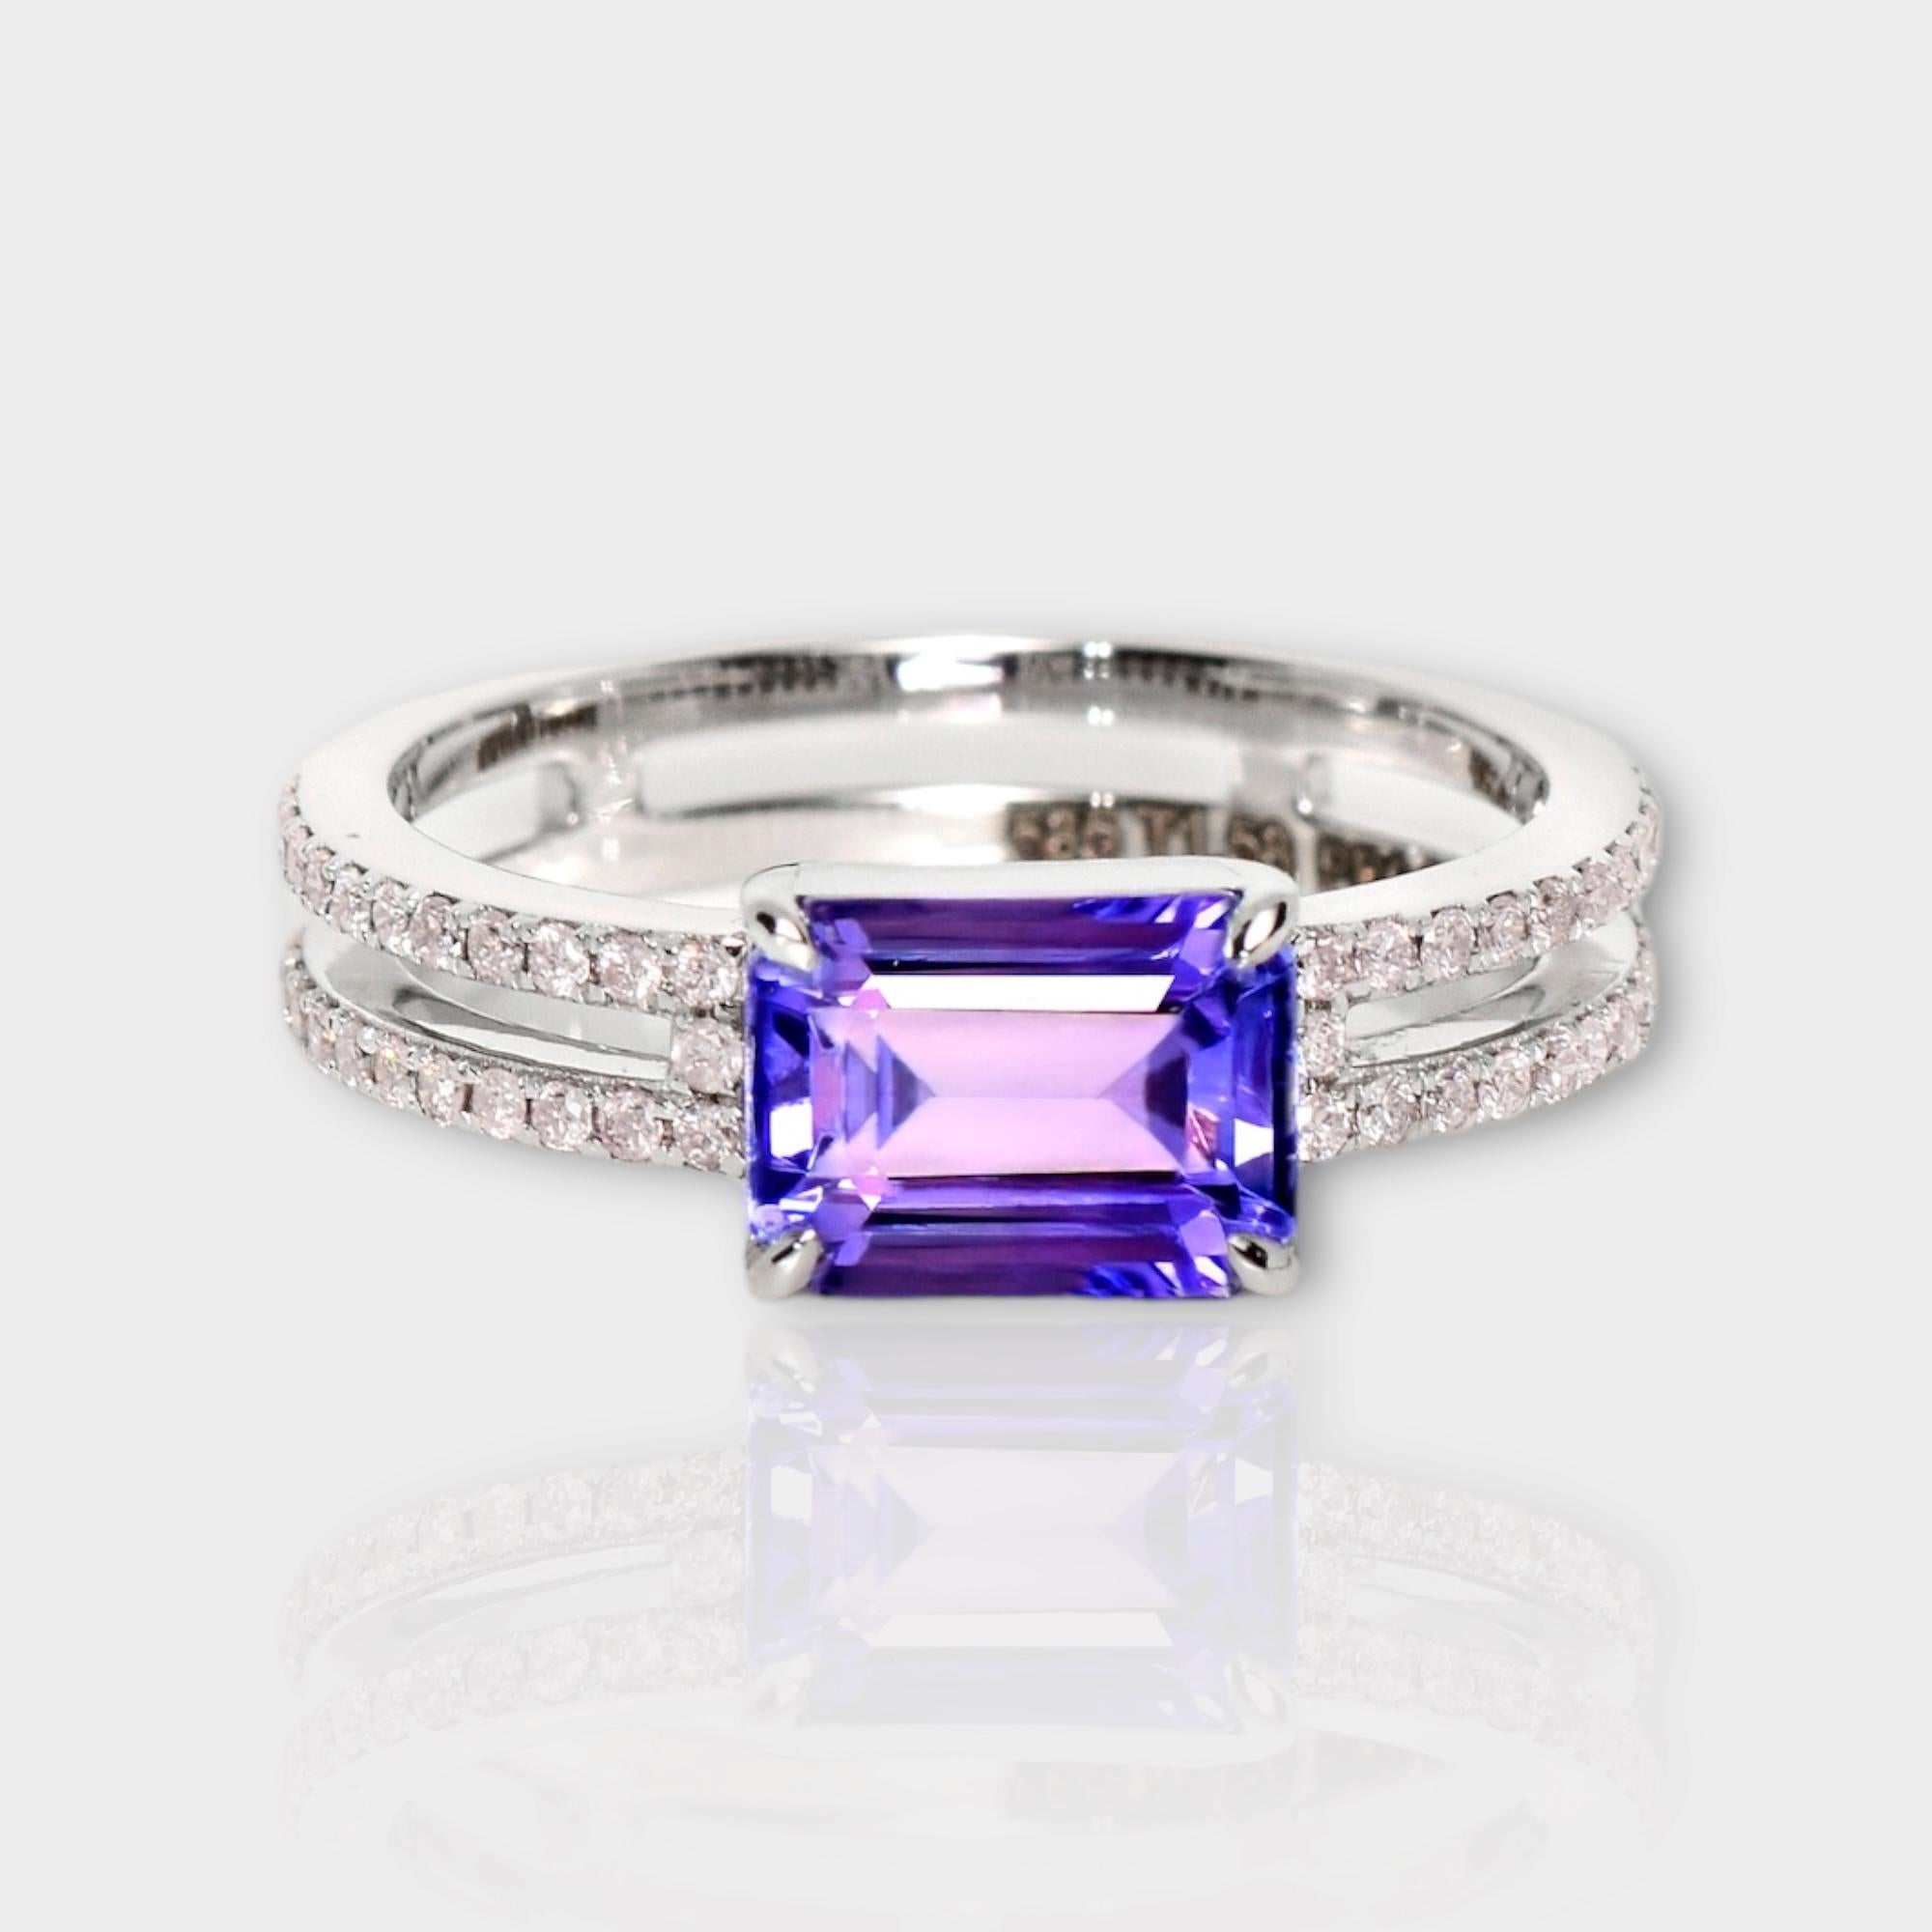 *IGI 14K 1.58 ct Tanzanite&Pink Diamond Antique Art Deco Style Engagement Ring*
The natural intense bluish violet tanzanite, weighing 1.58 ct, is the center stone surrounded by natural pink diamonds weighing 0.25 ct on the 14K white gold halo design